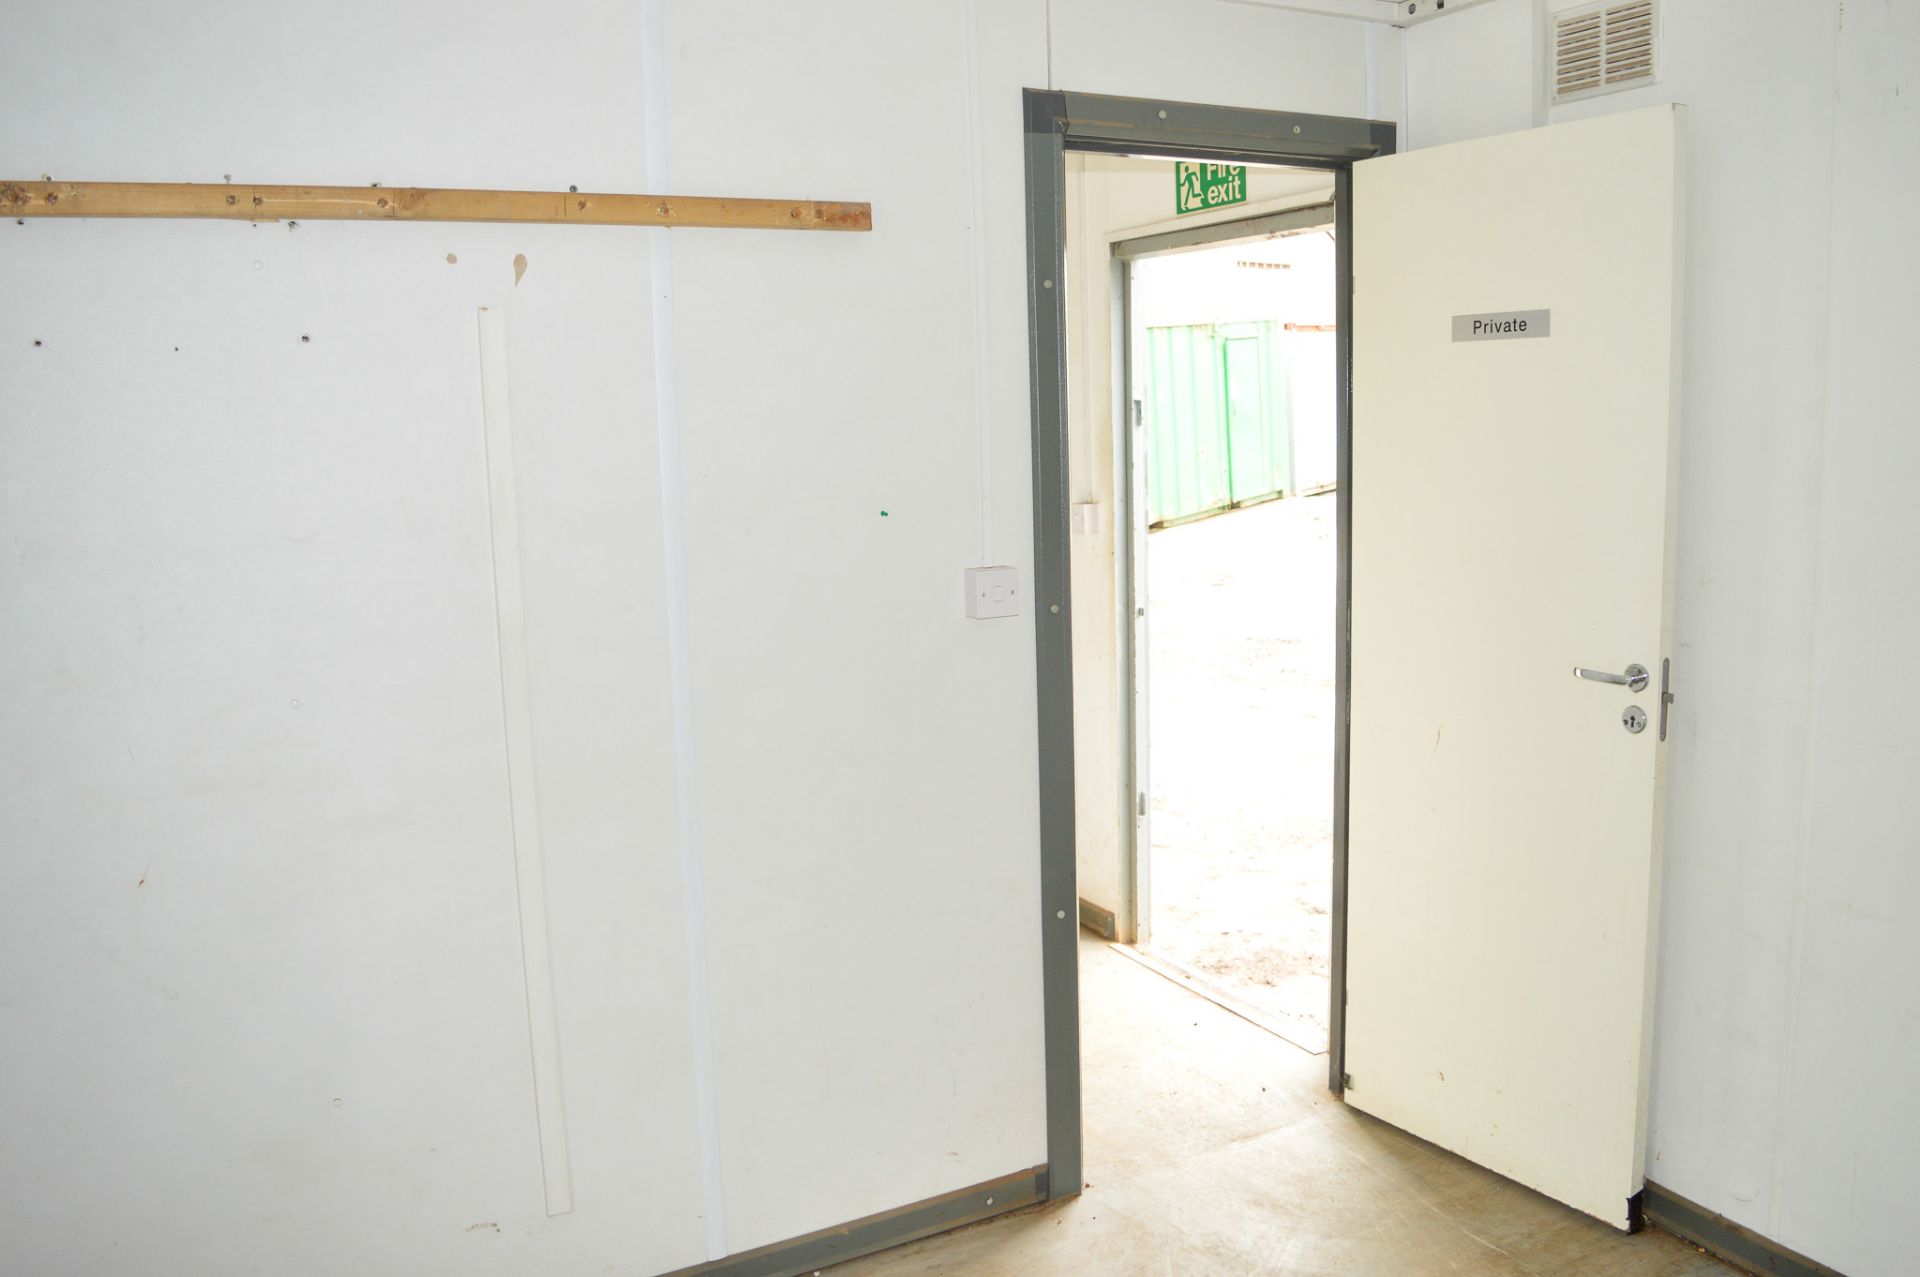 32 ft x 10 ft steel anti vandal jack leg site office unit cpmprising of: 2 offices, kitchen & toilet - Image 11 of 12